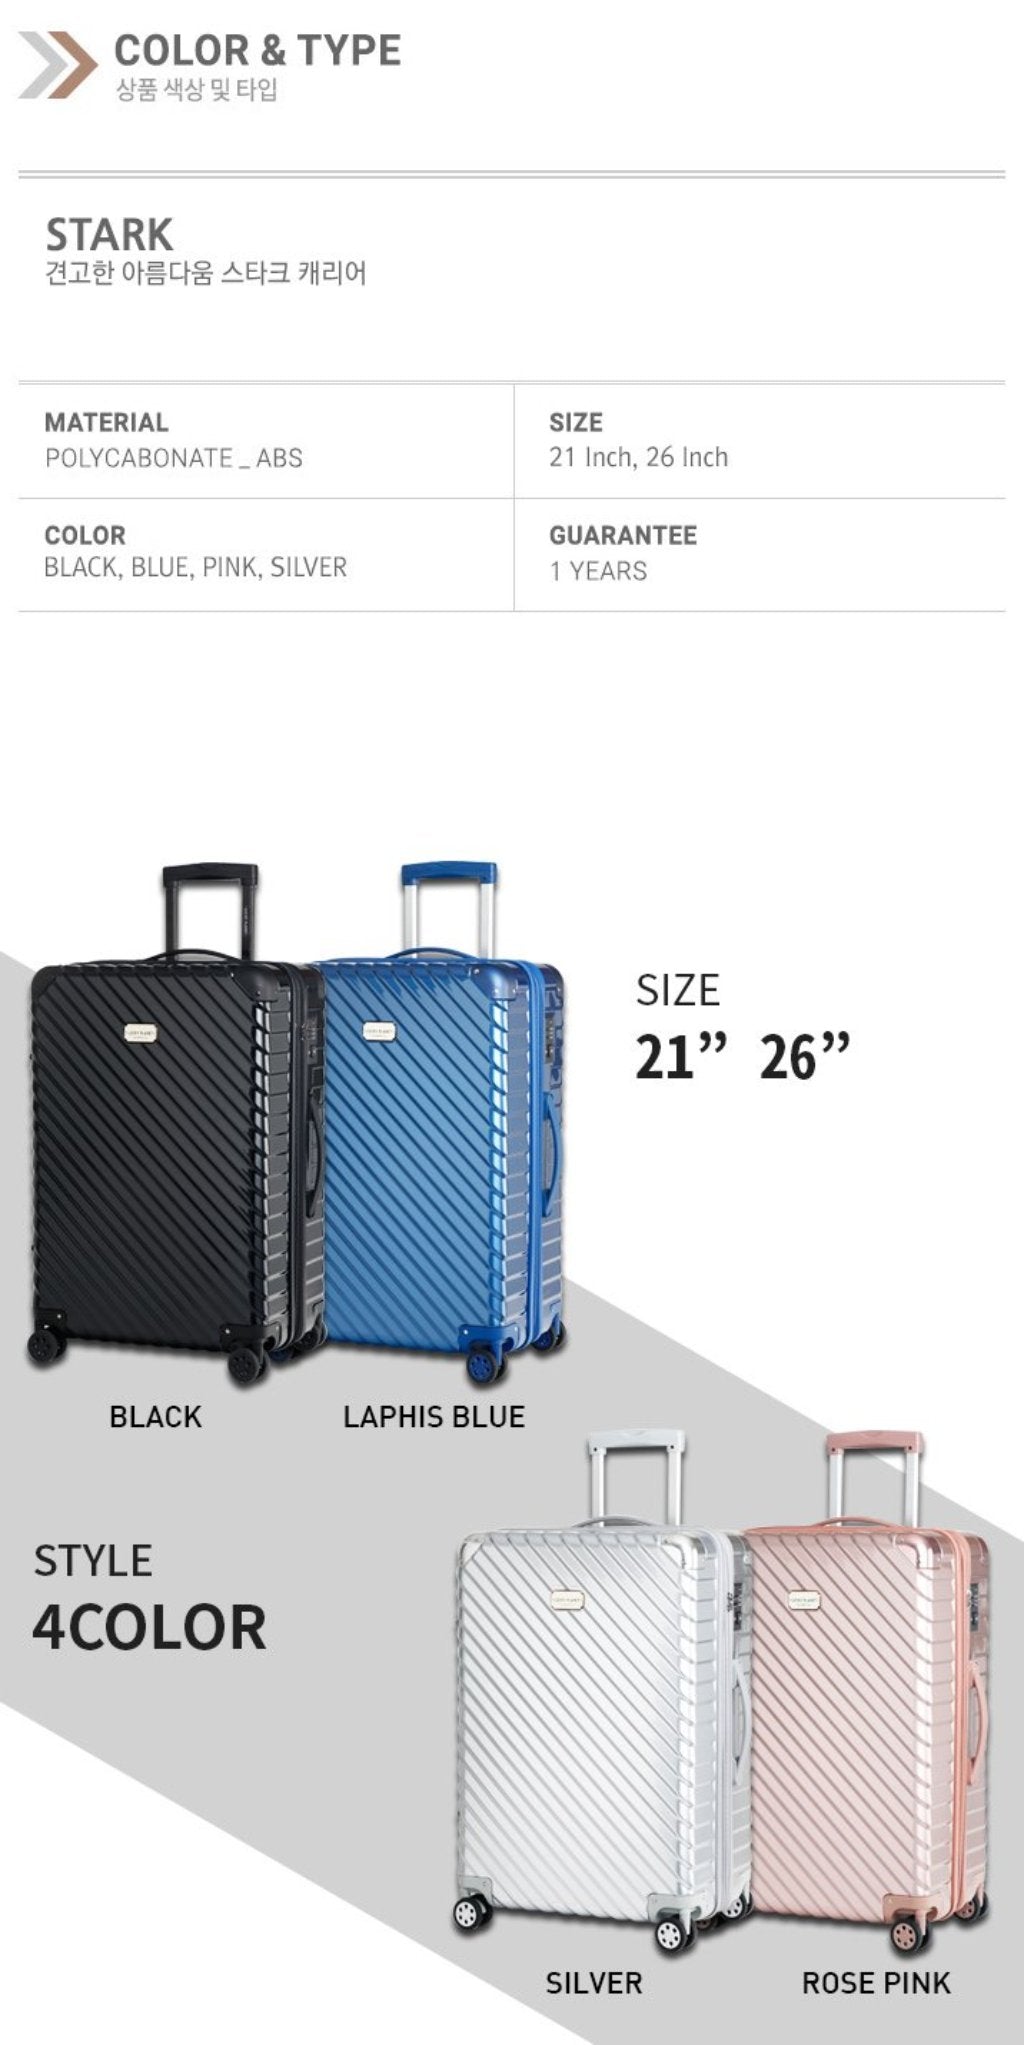 [Lucky Planet] Stark 26-inch Luggage - Luckyplanetusa